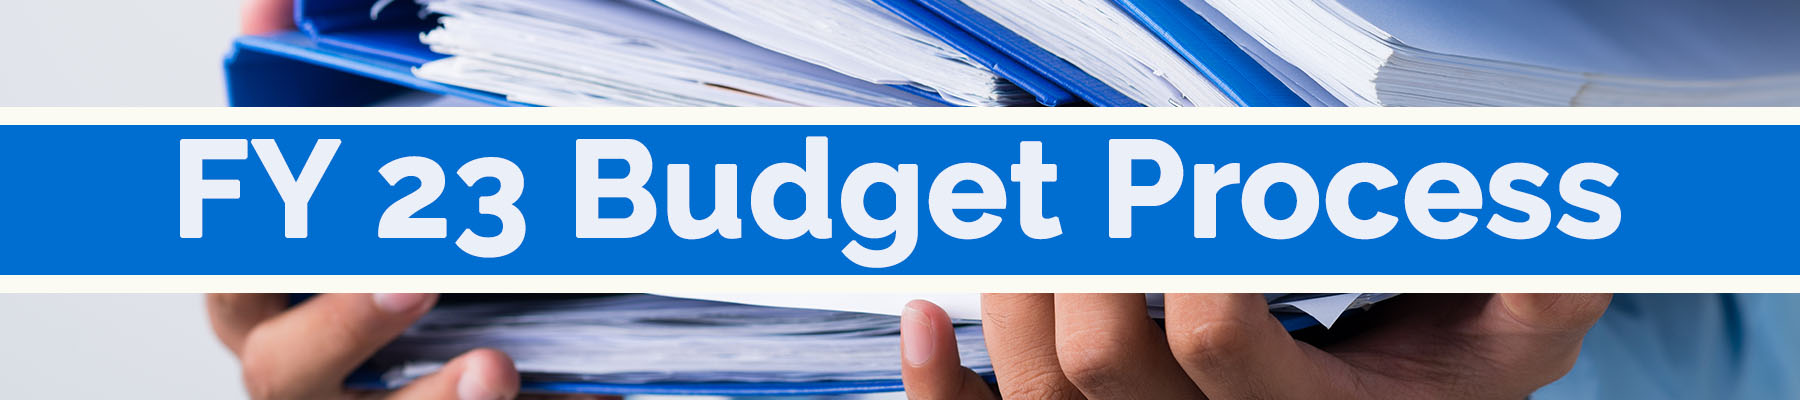 FY 23 Budget Process Videos